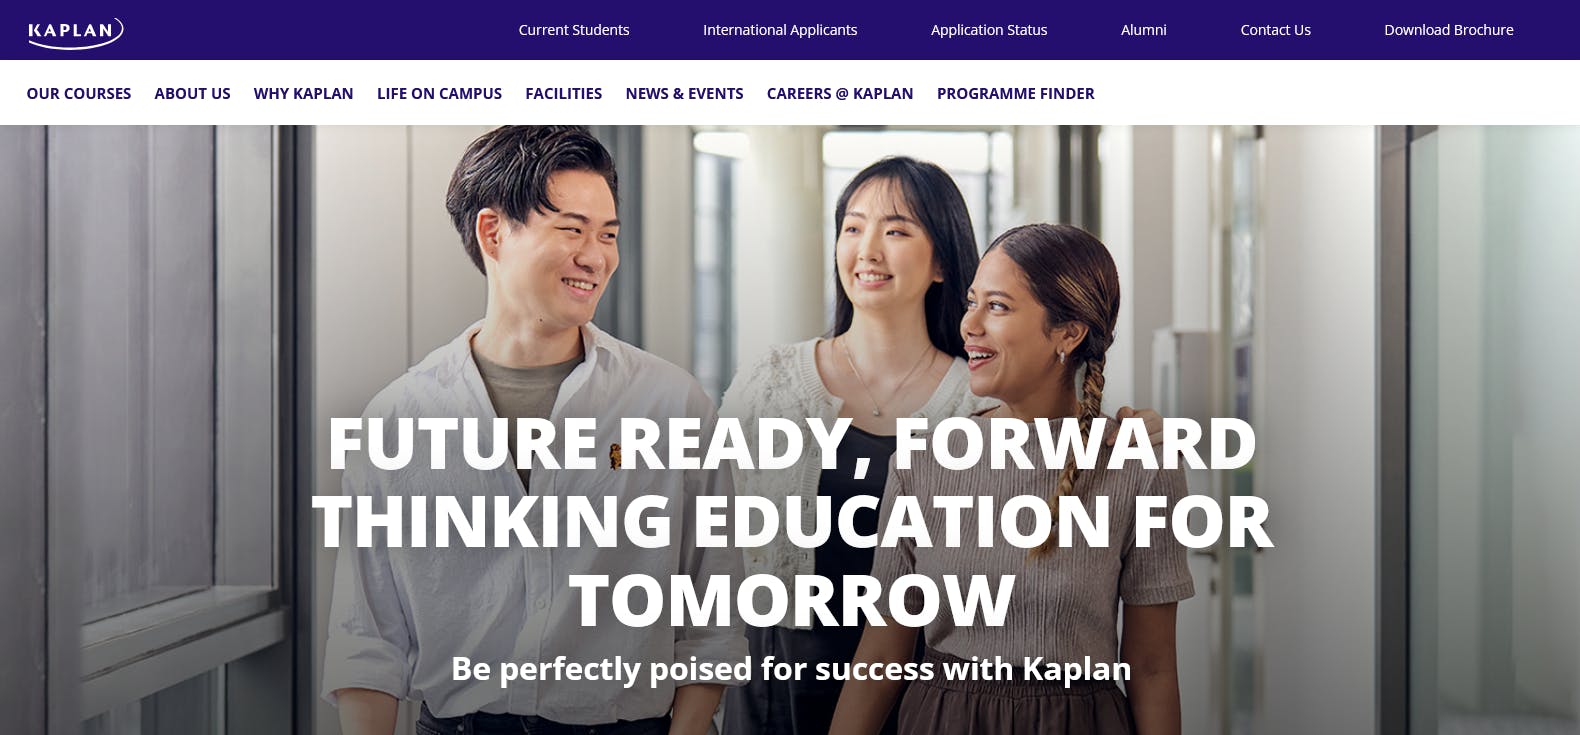 Kaplan's website built with Prismic